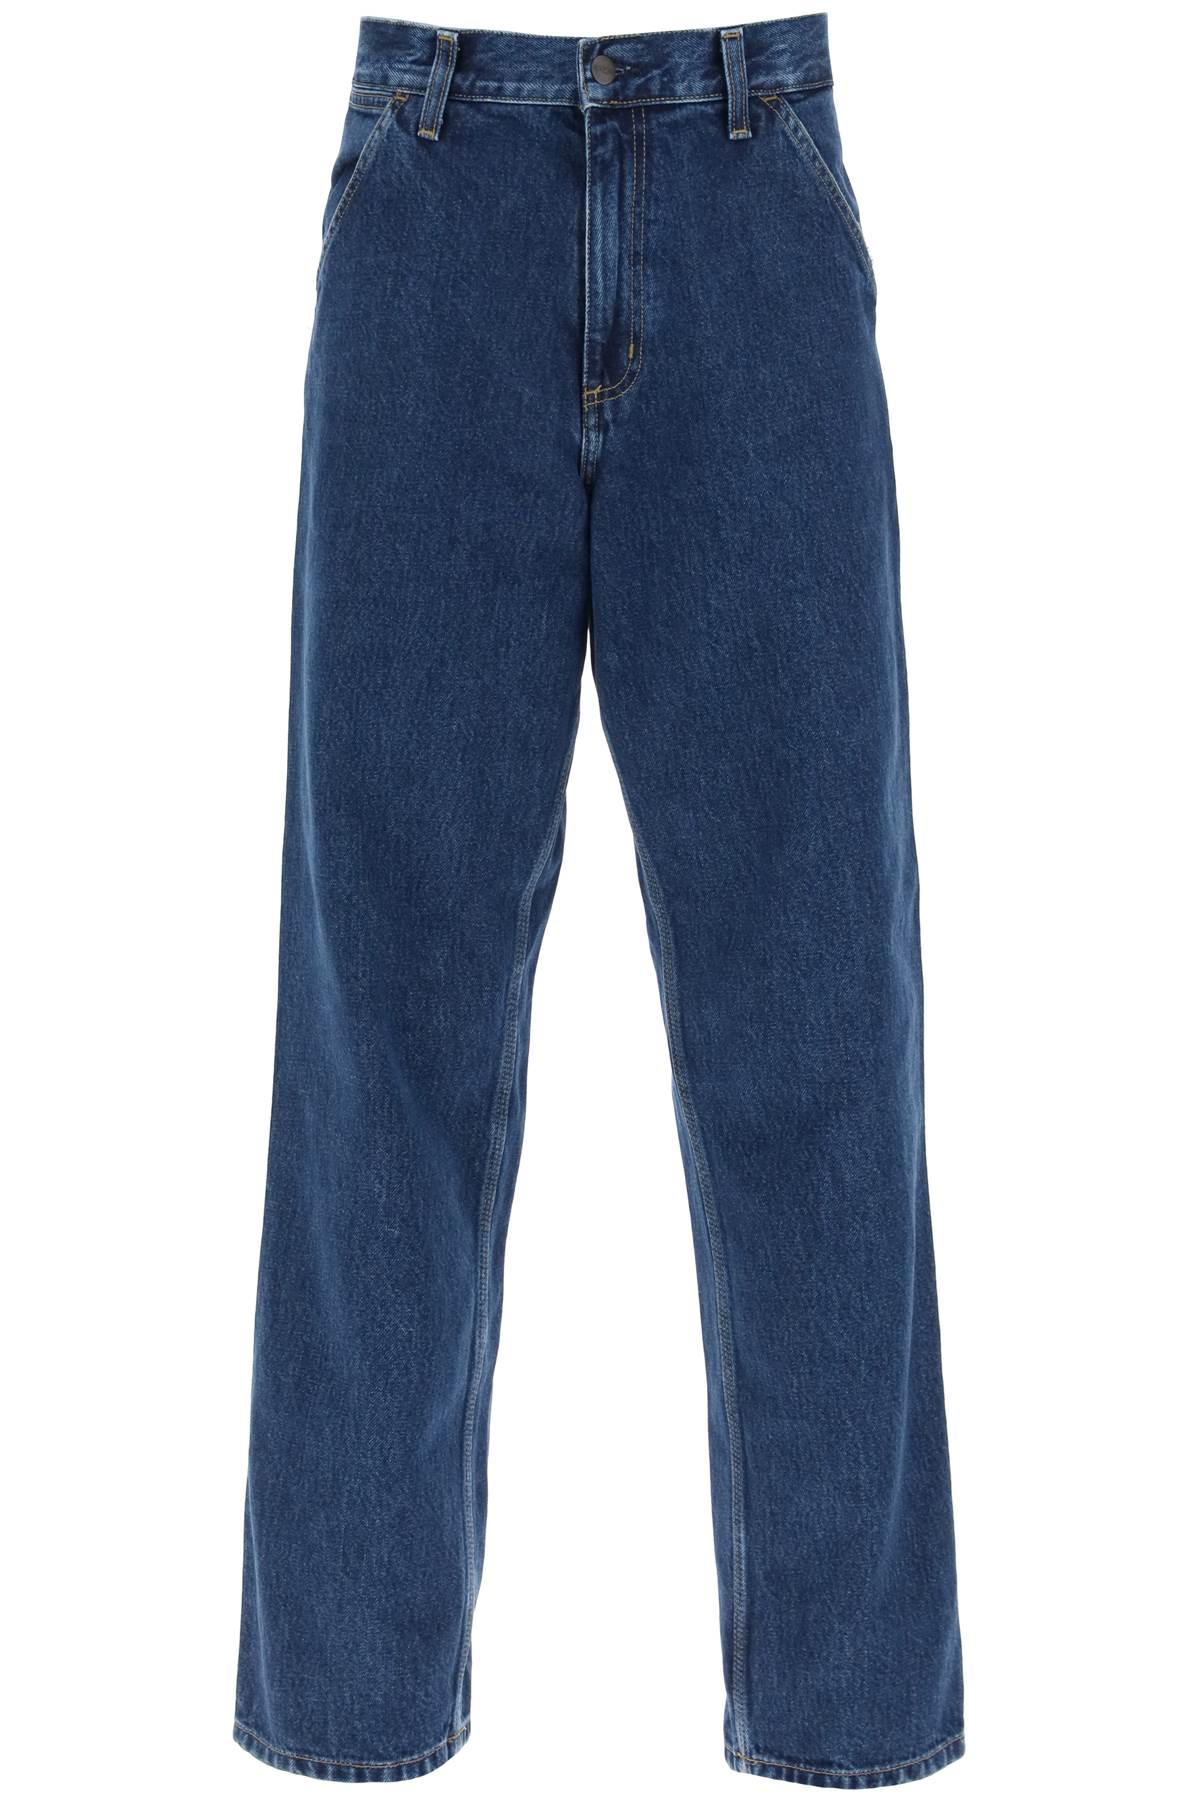 Carhartt wip 'smith' cargo jeans-men > clothing > jeans > jeans-Carhartt Wip-30-Blue-Urbanheer